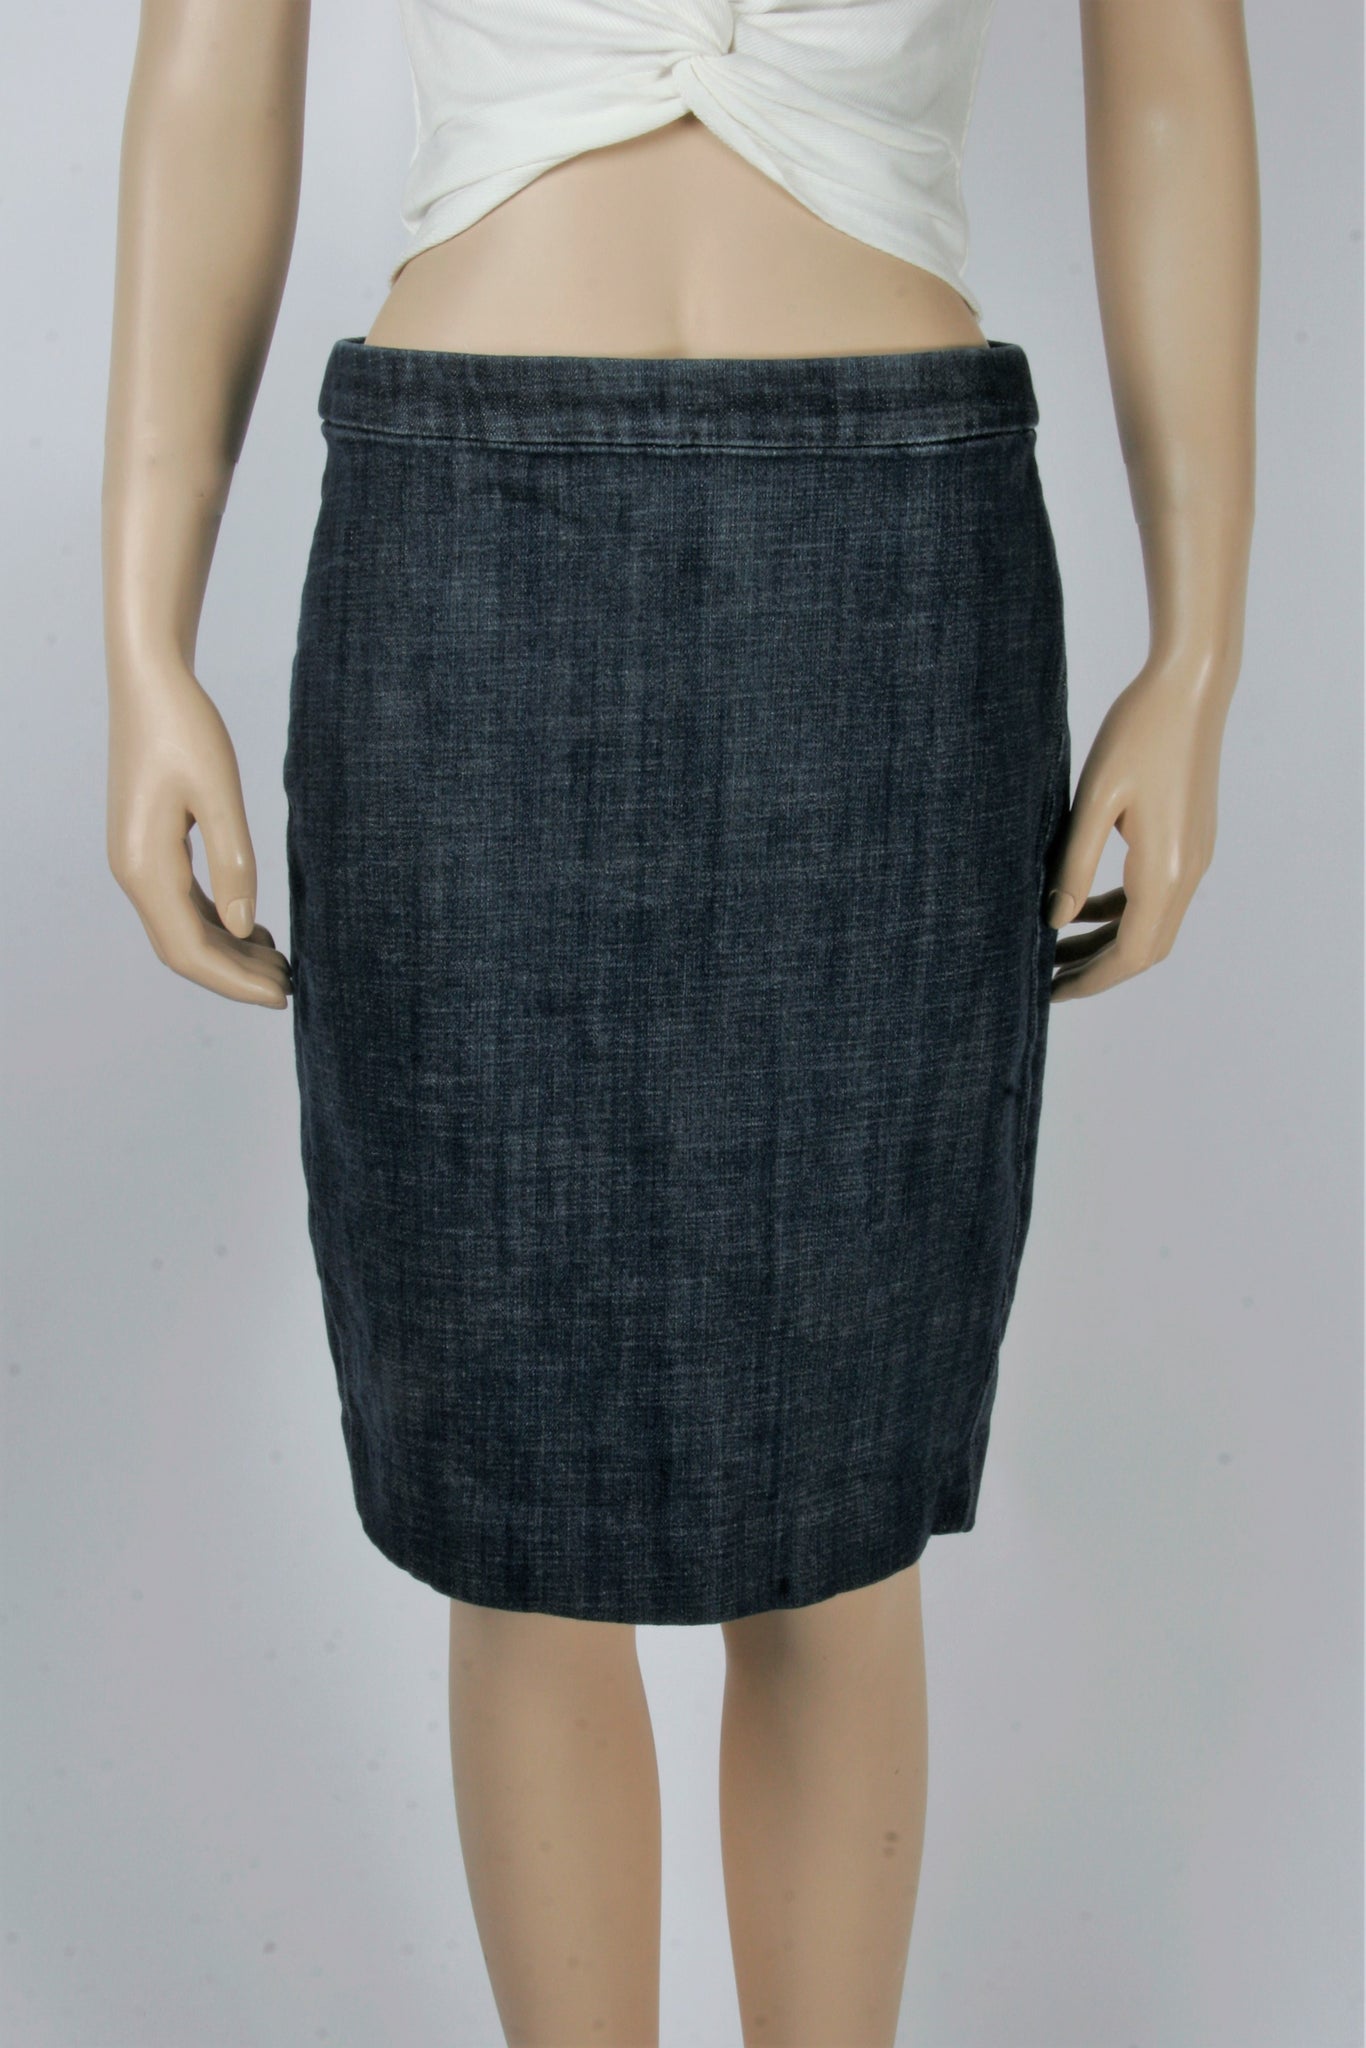 BOTTOM : Hazel Denim Pencil Skirt - Grey by KEI MAG